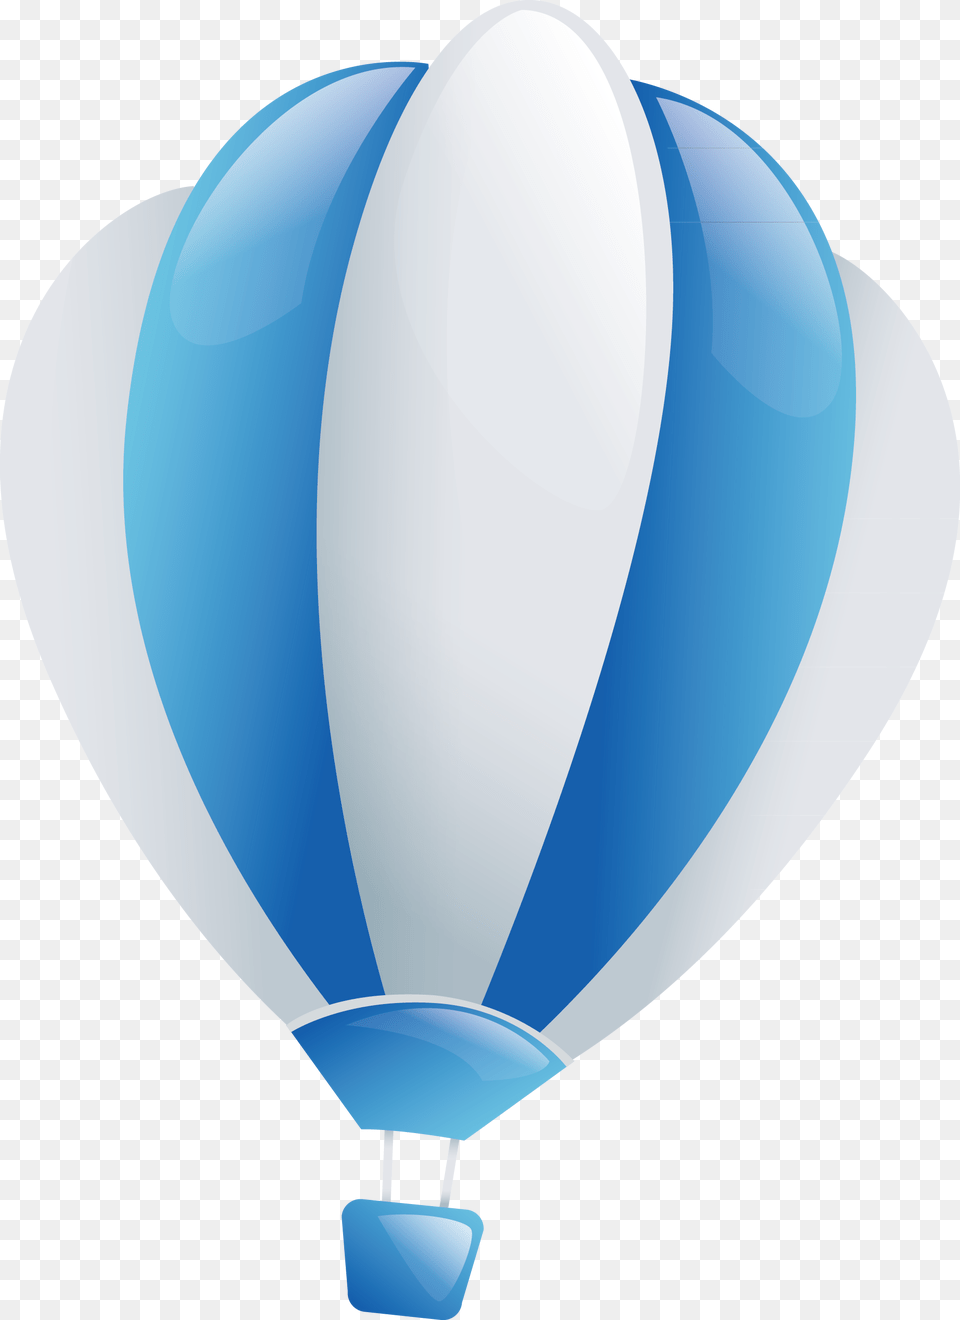 Cartoon Images Of Parachute, Balloon, Aircraft, Transportation, Vehicle Png